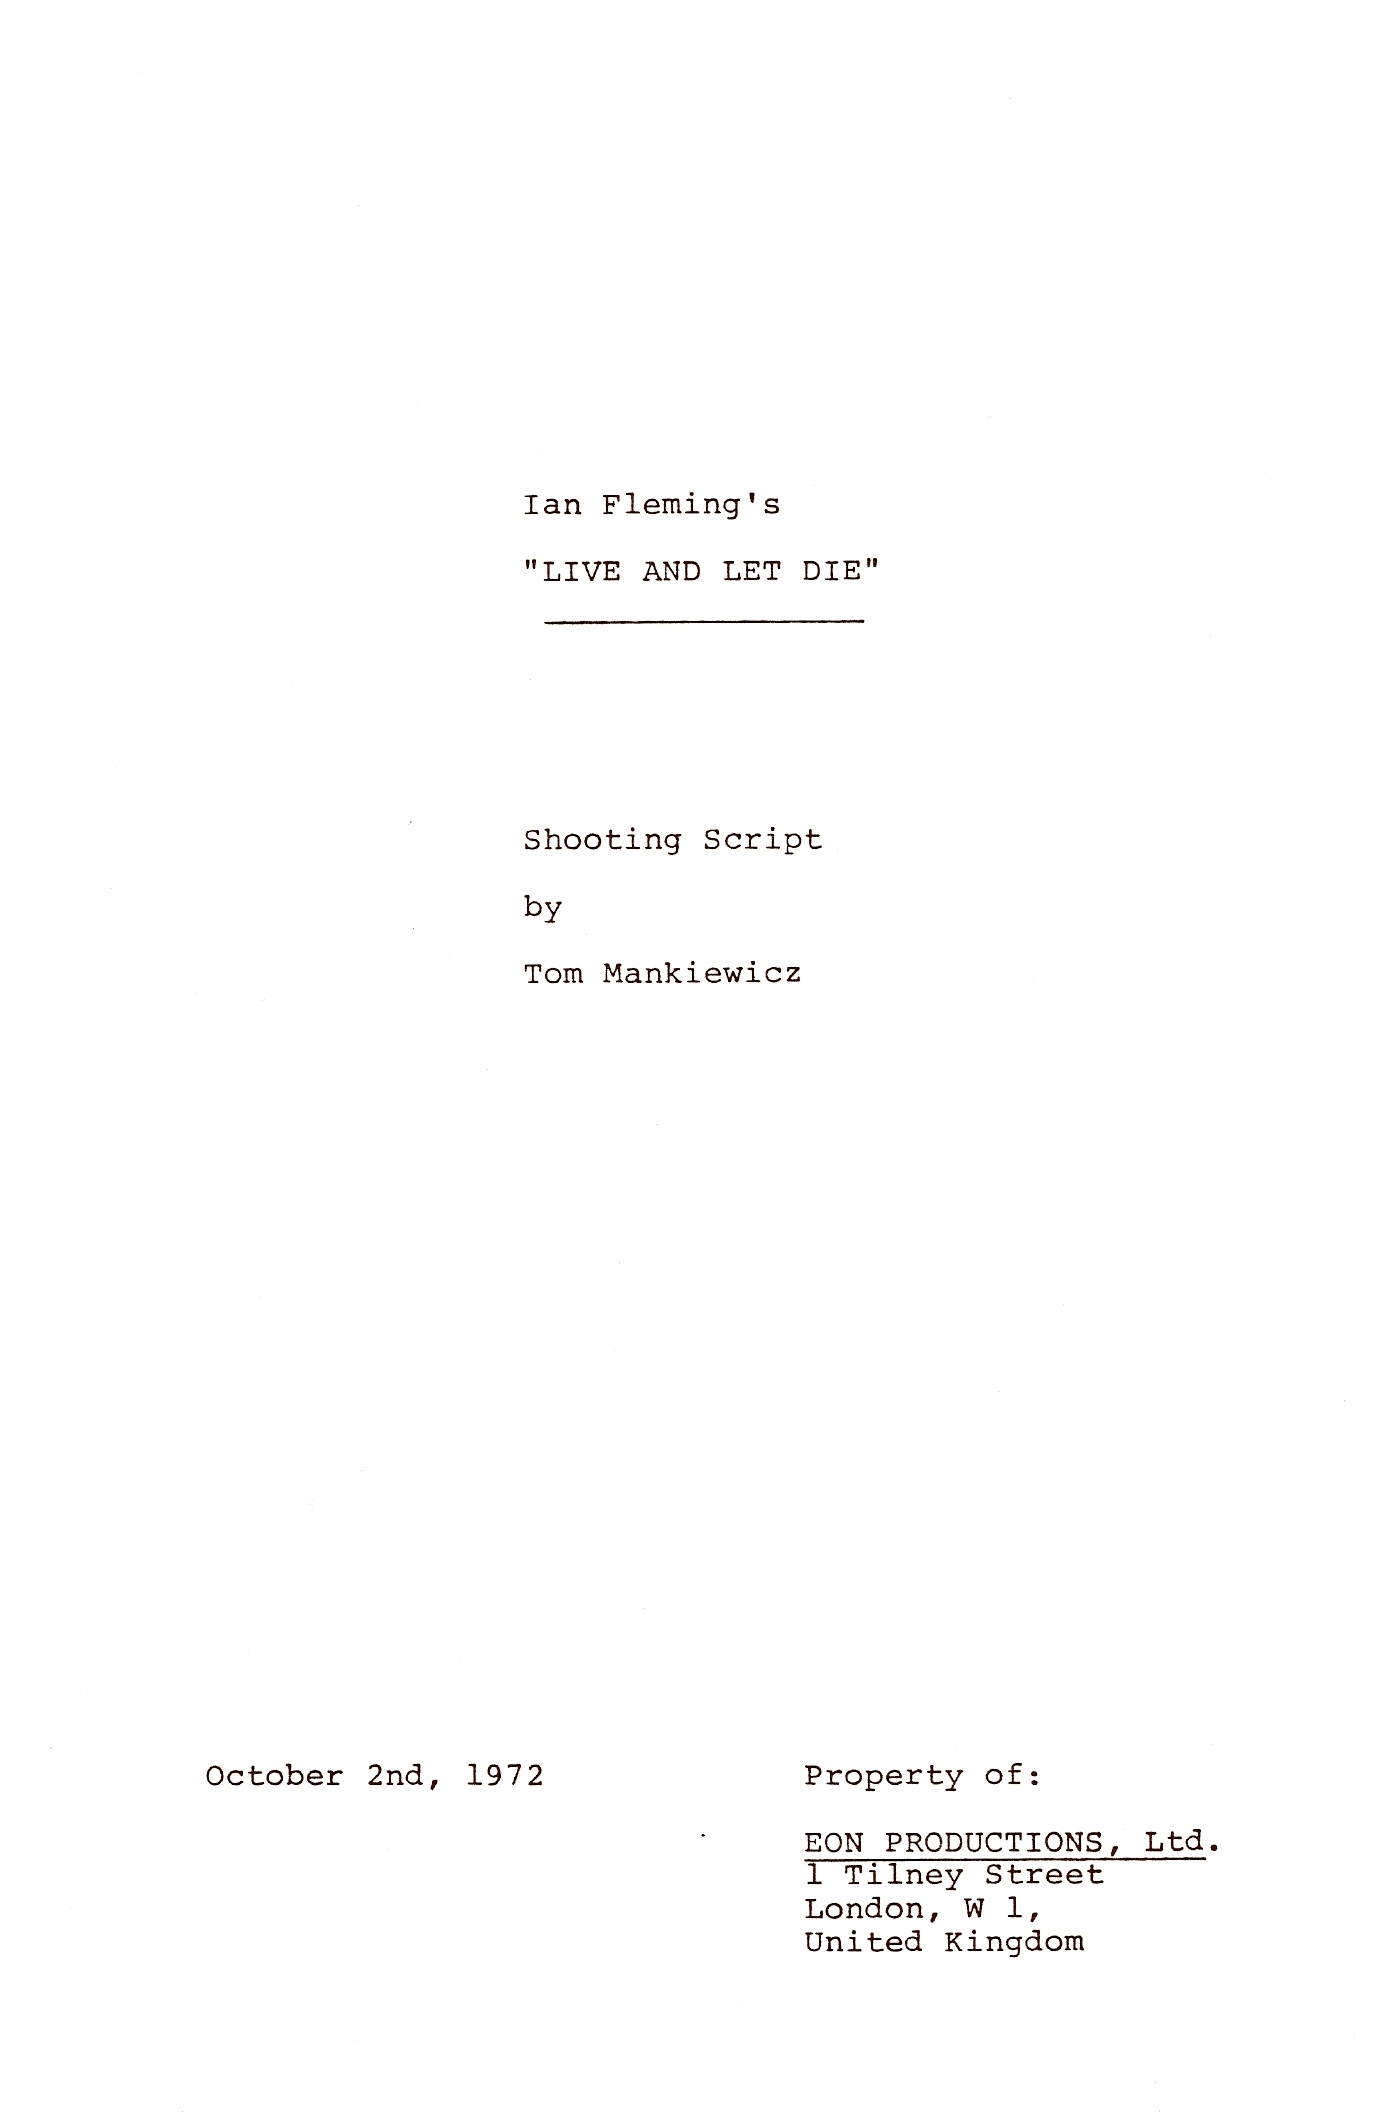 Original screenplay, 120 pages Shooting script